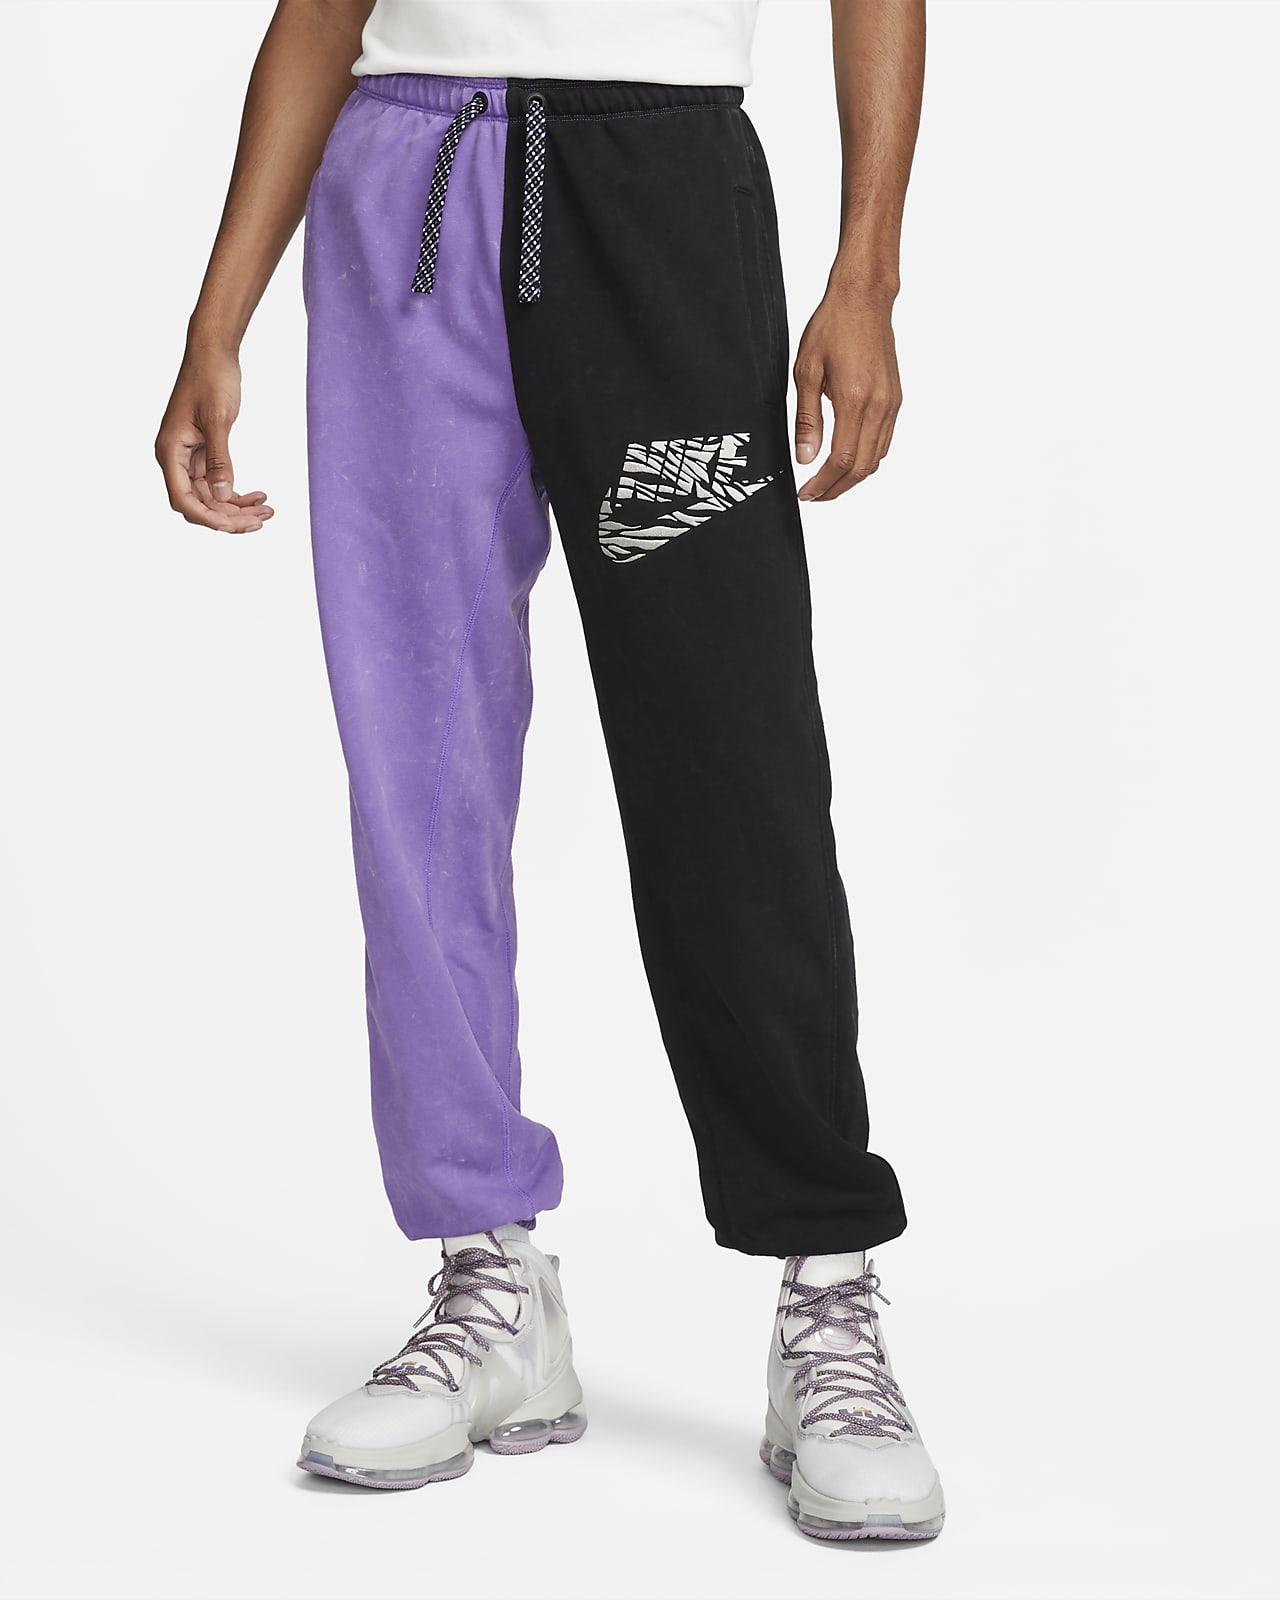 Nike Dri-FIT Standard Issue Men's Premium Basketball Pants